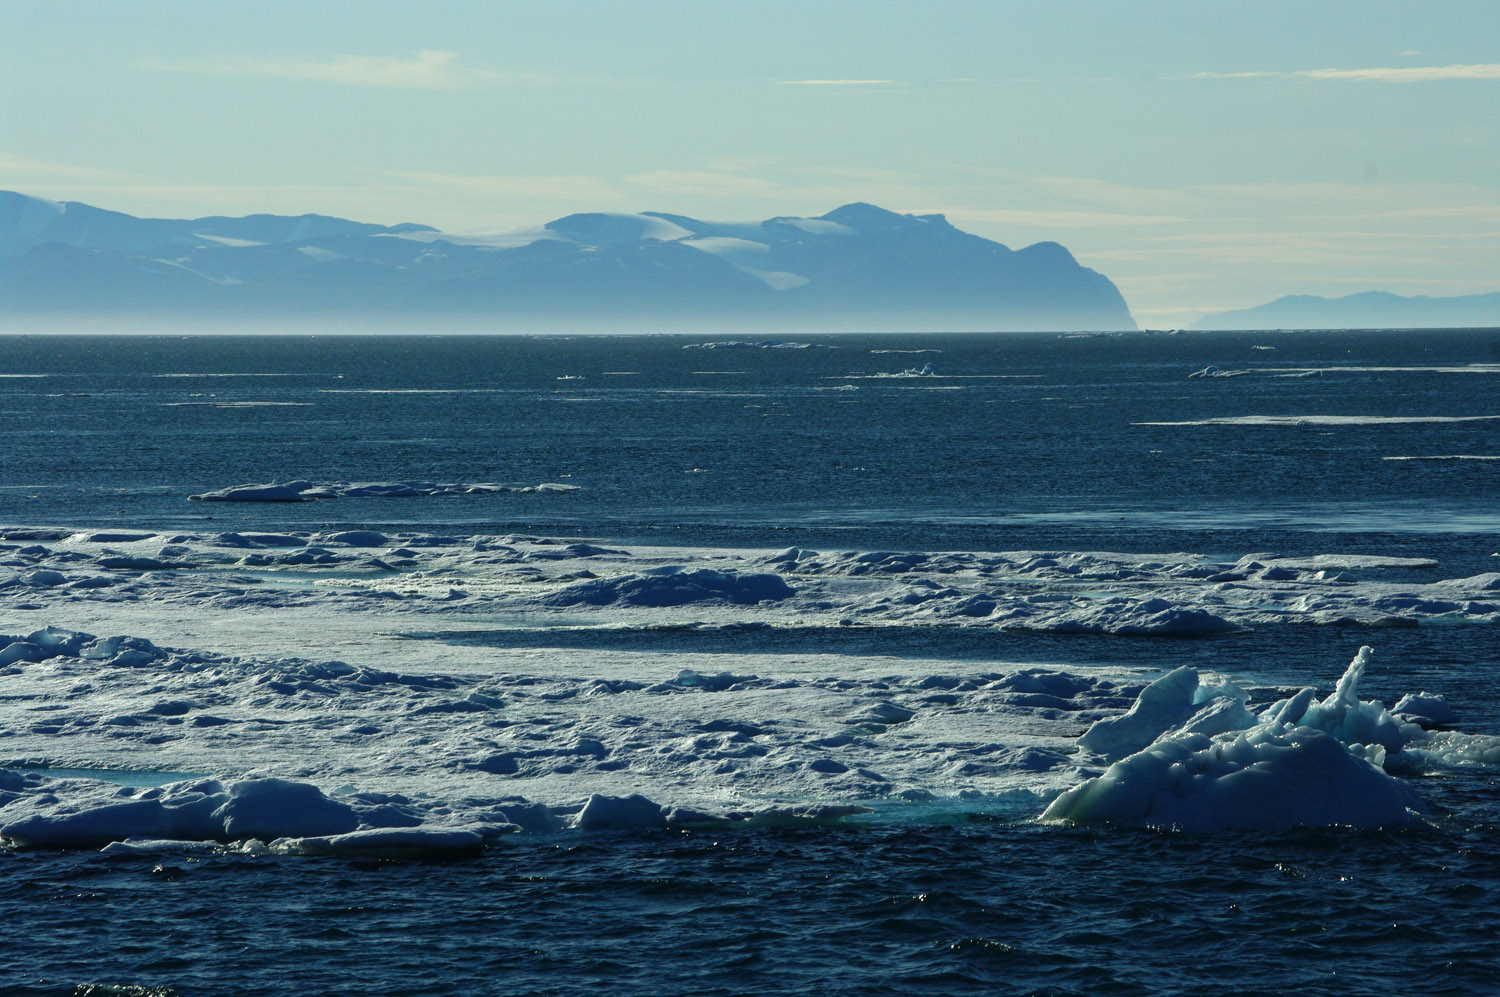 Baffin Bay